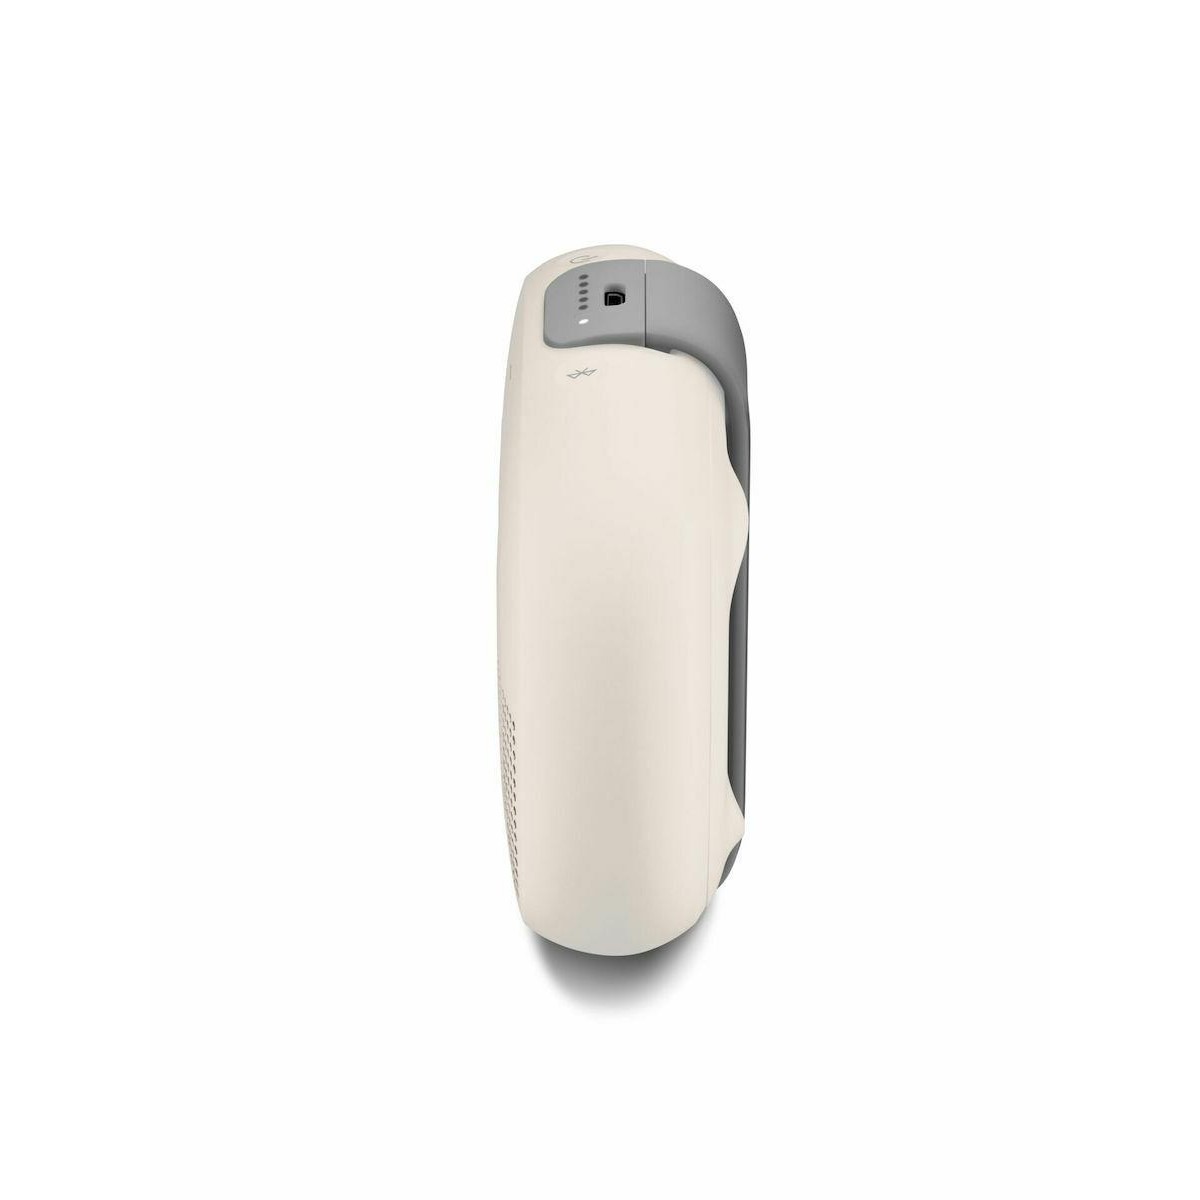 Bose SoundLink Micro Portable Bluetooth Speaker Smoke white